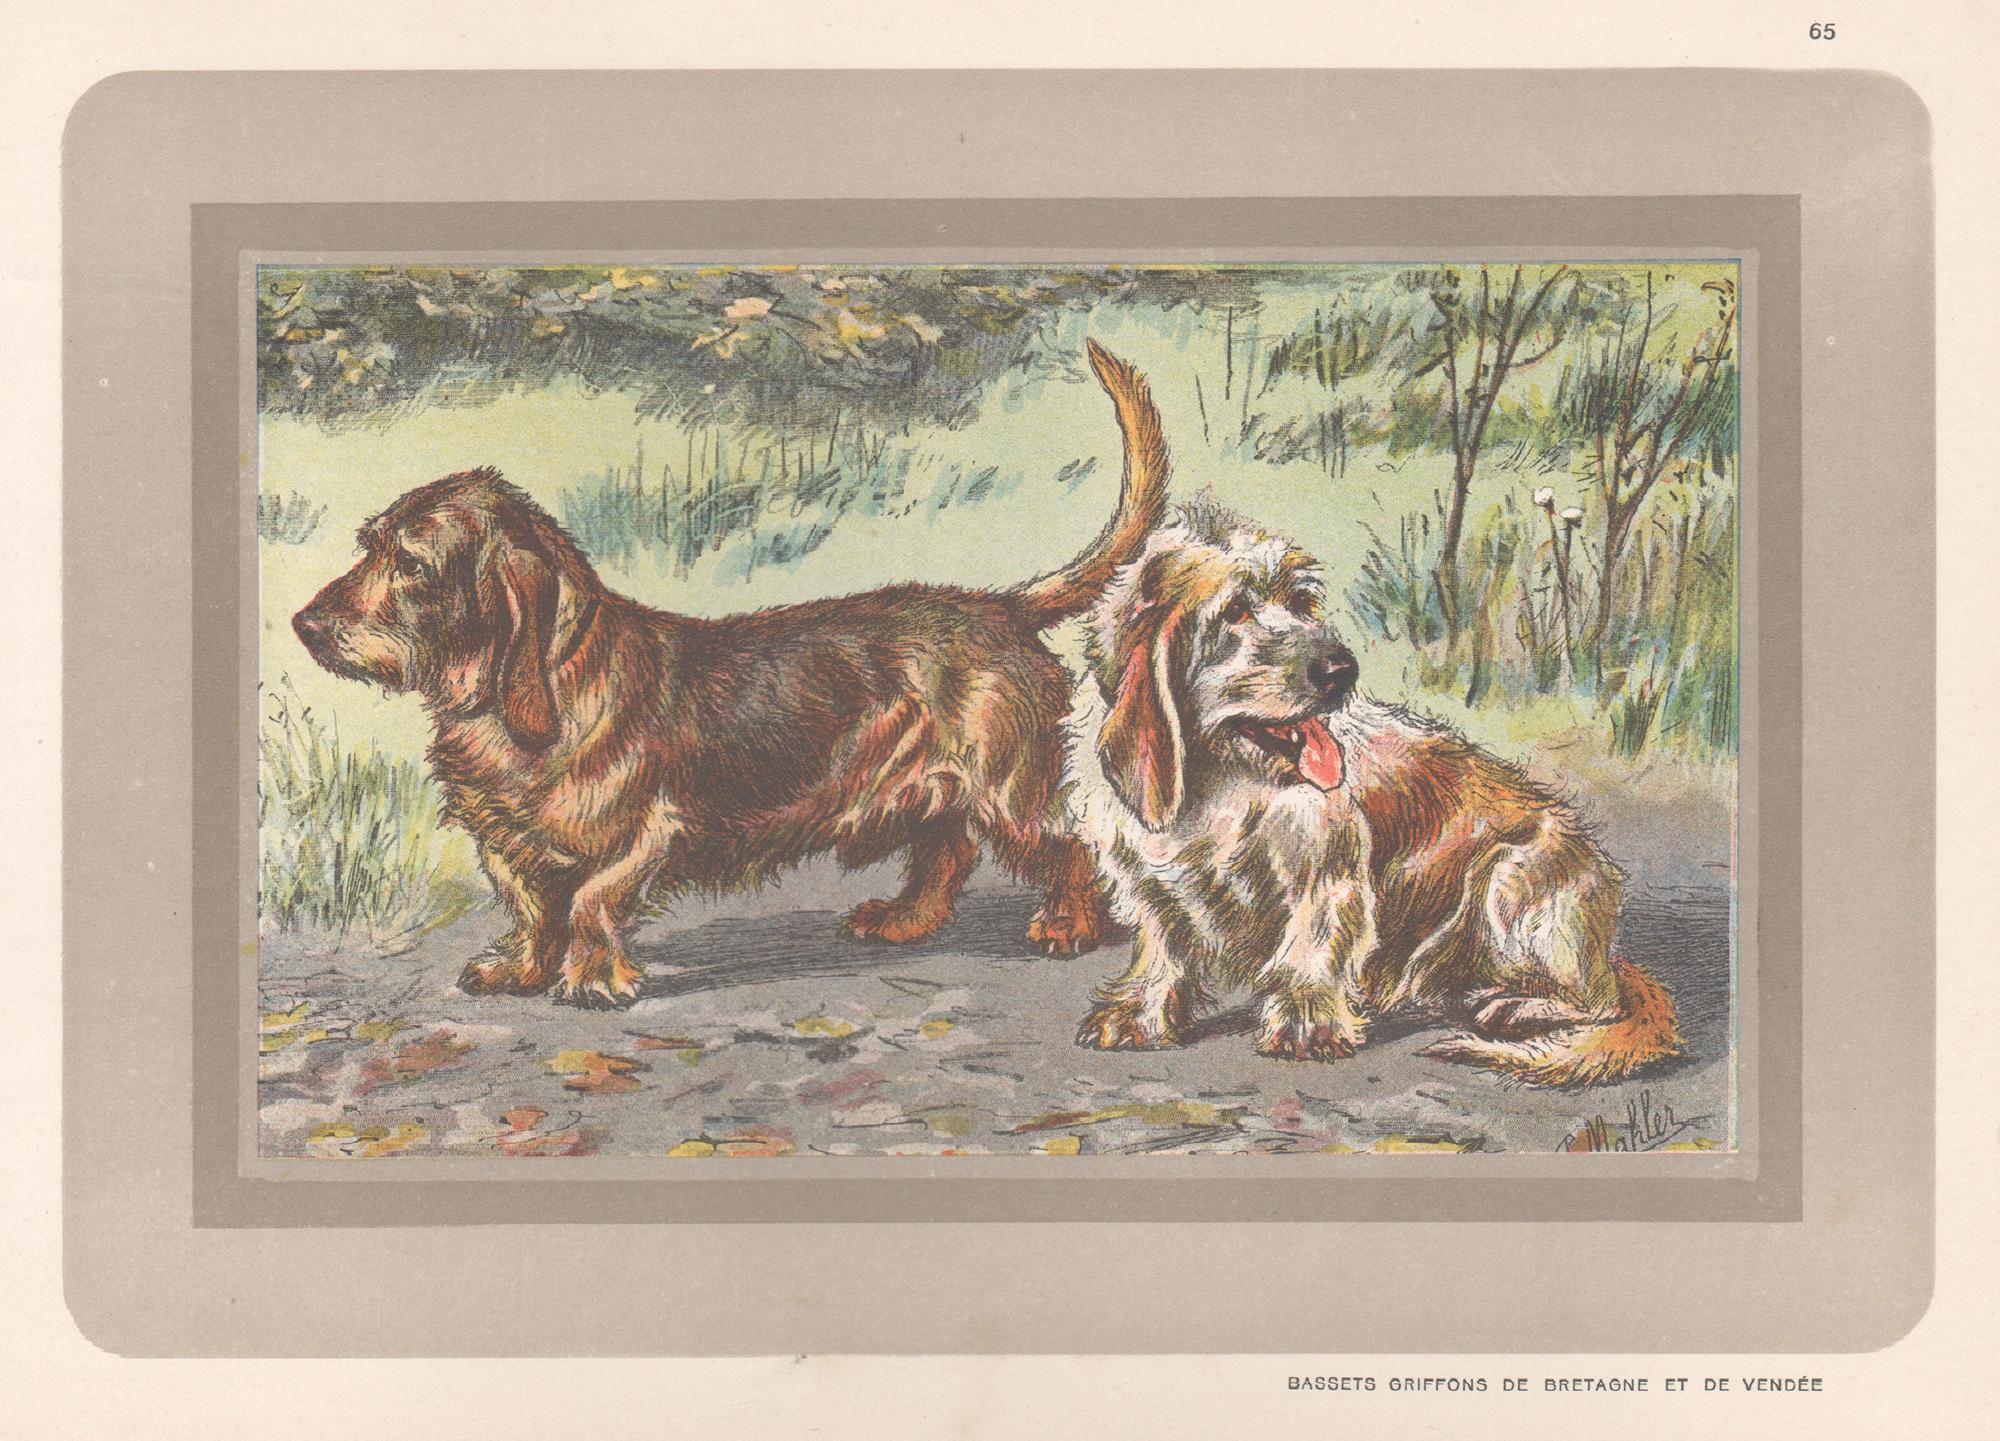 P. Mahler Animal Print - Bassets Griffons, French hound dog chromolithograph print, 1930s